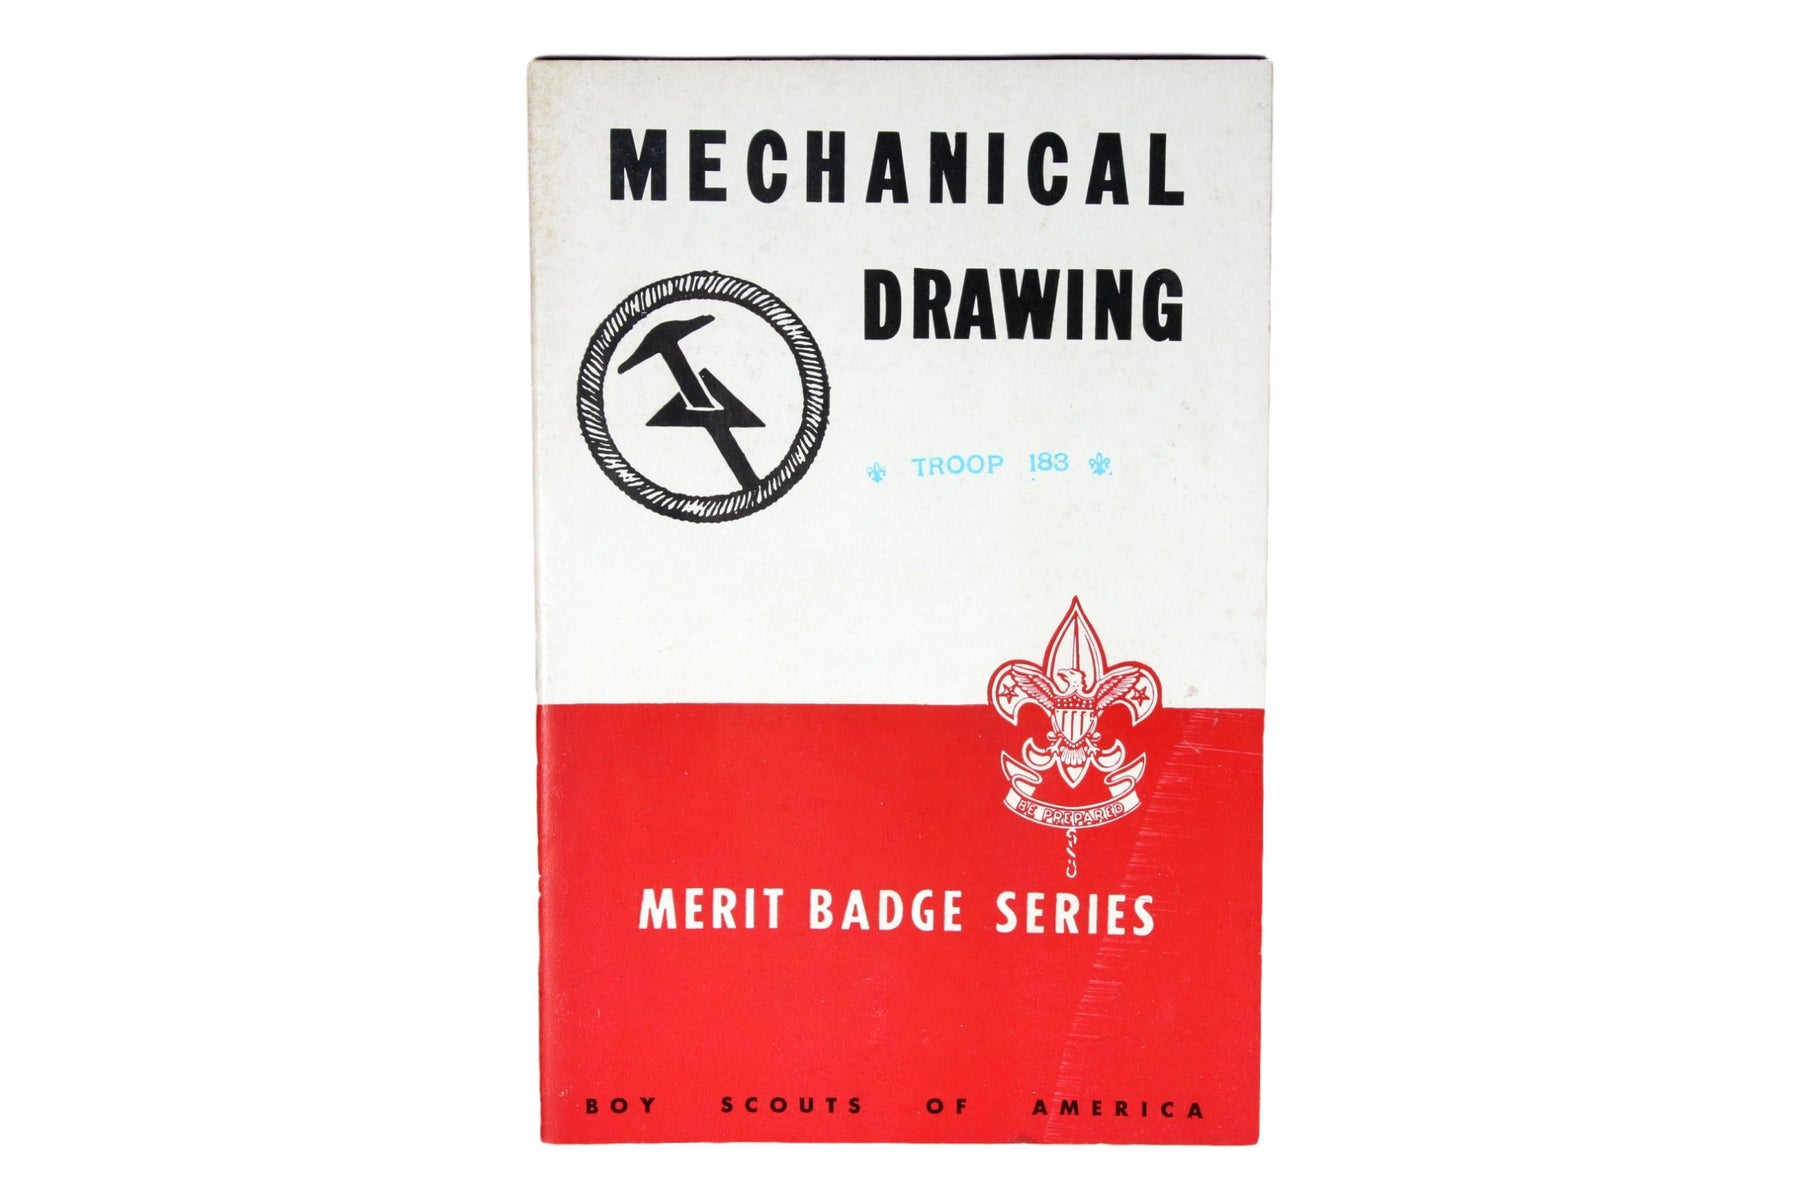 Mechanical Drawing MBP 1951